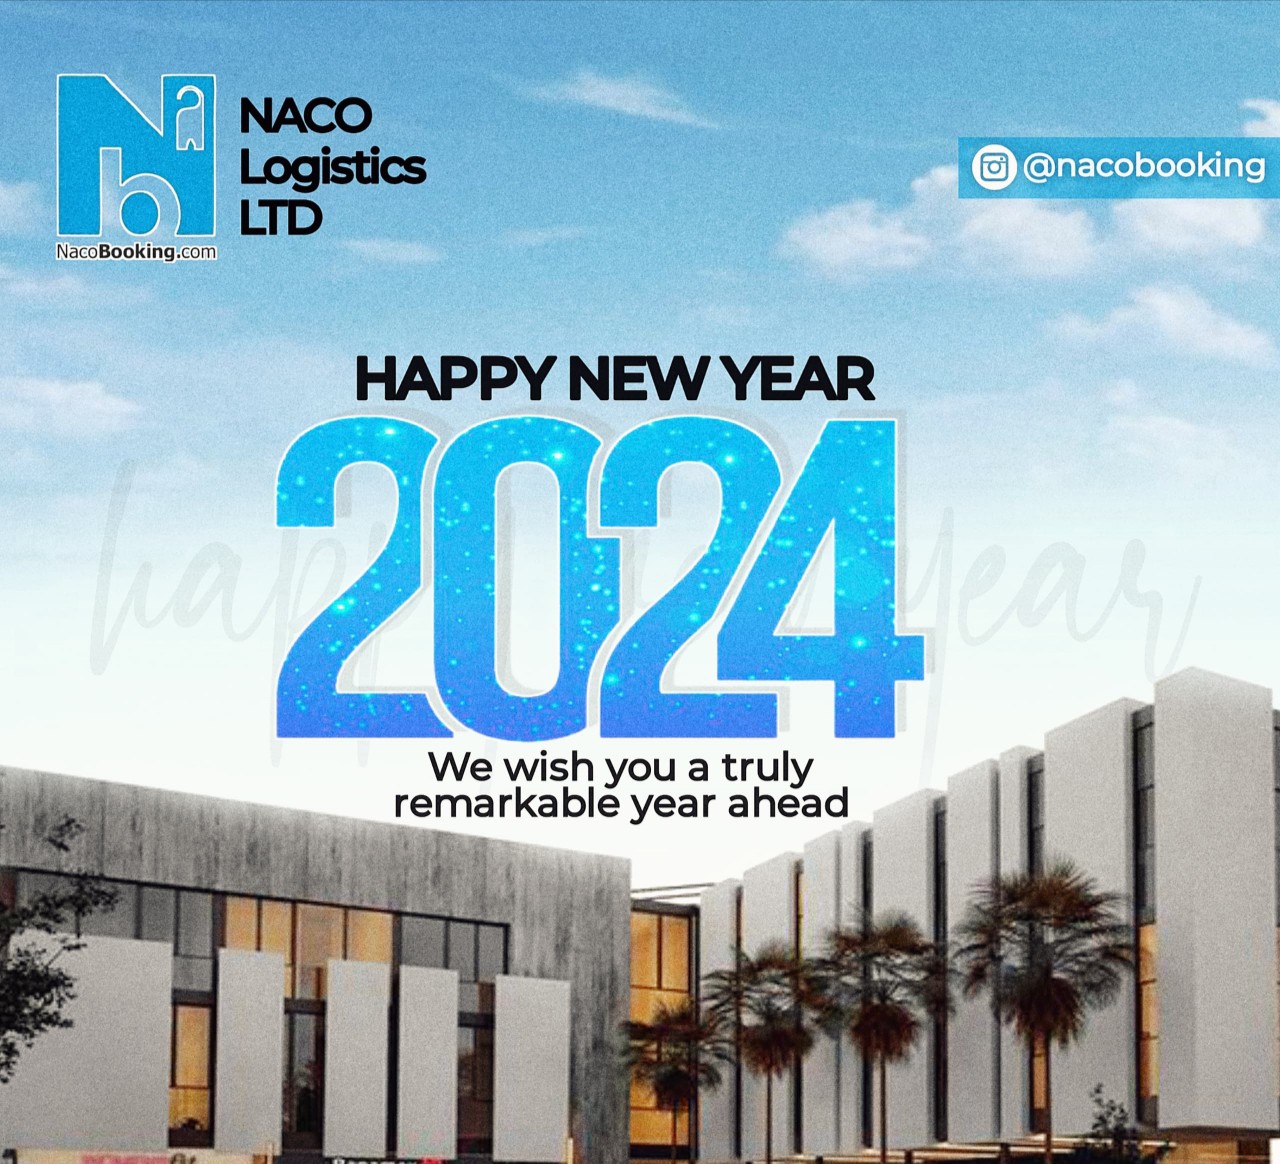 Happy New Year from us at NACO Logistics Ltd.!